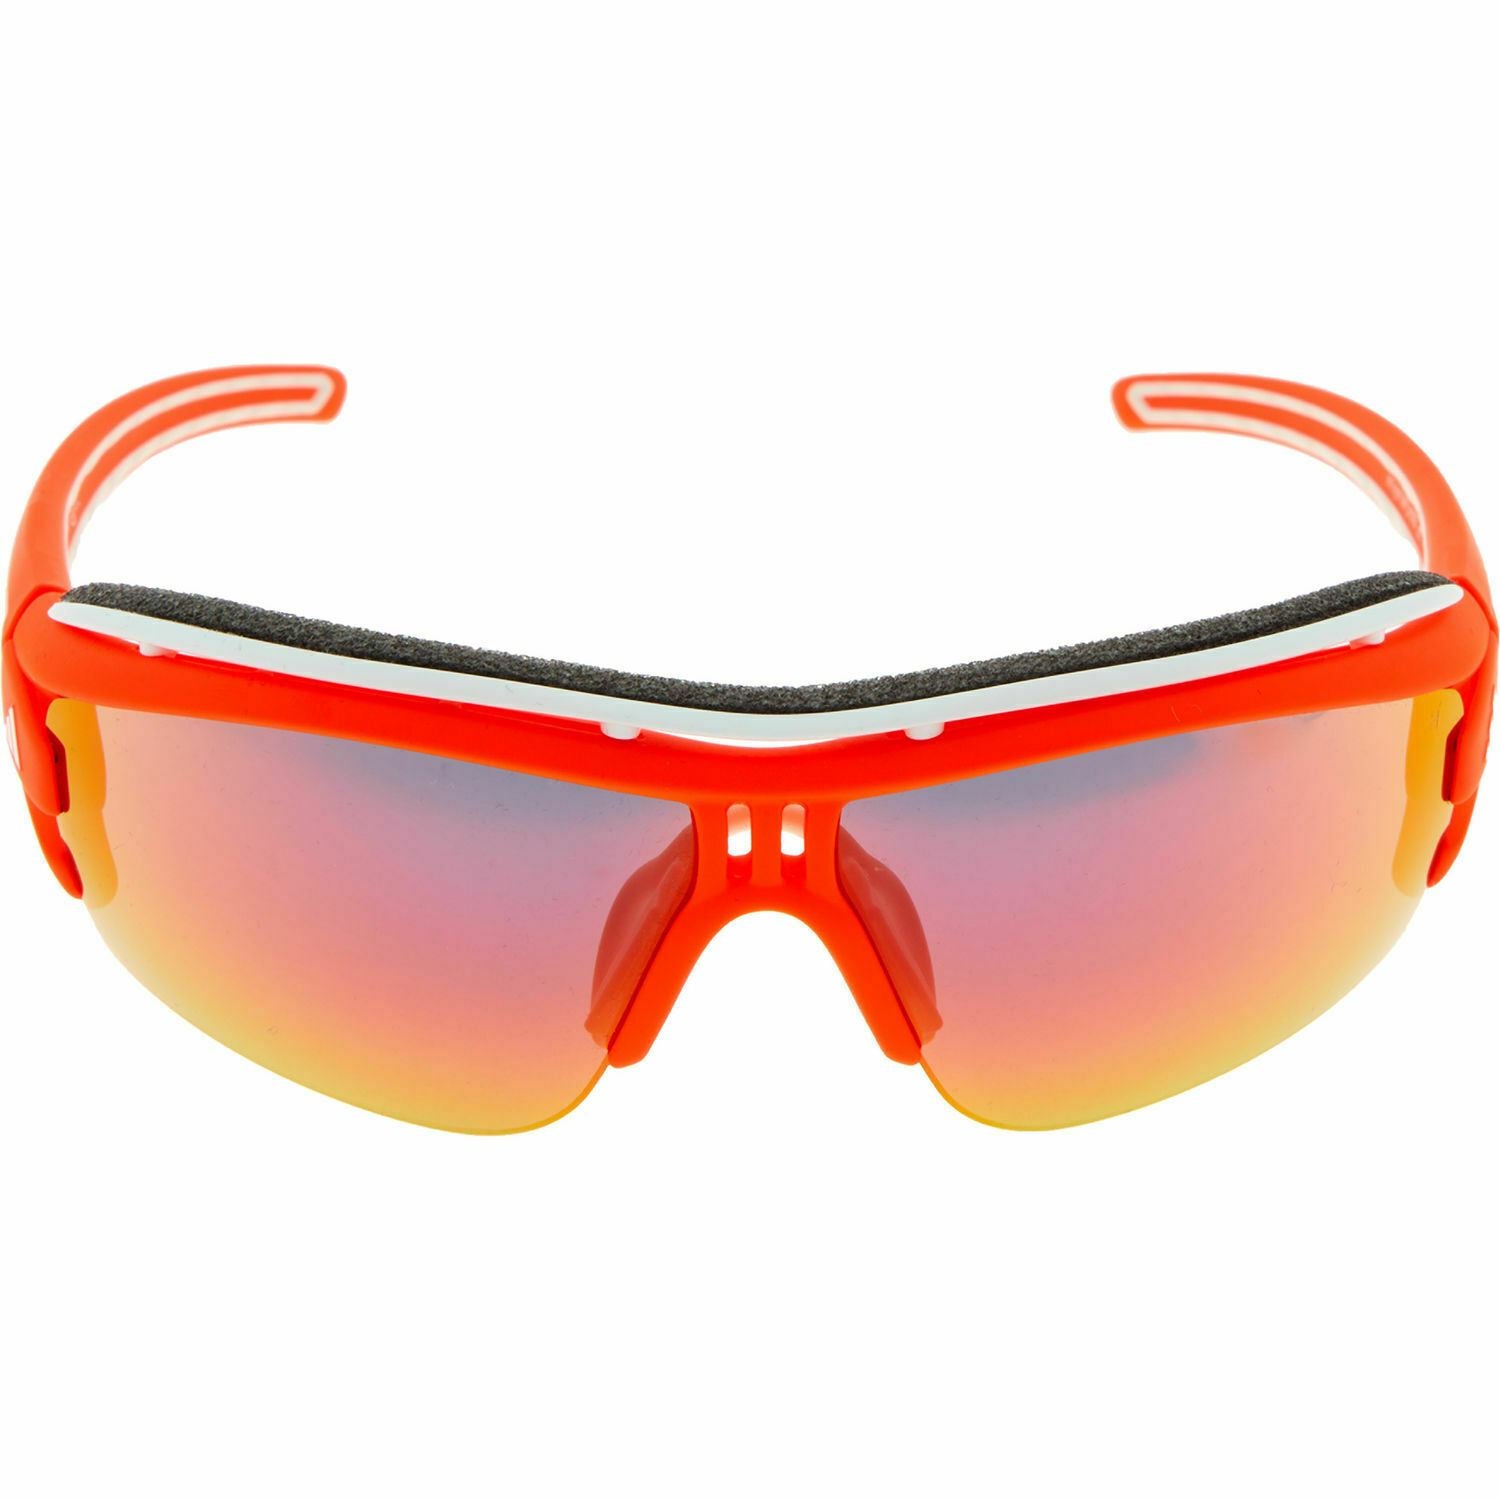 ADIDAS Men's Evil Eye Halfrim Pro XS Sunglasses, Neon Red, Model : A199